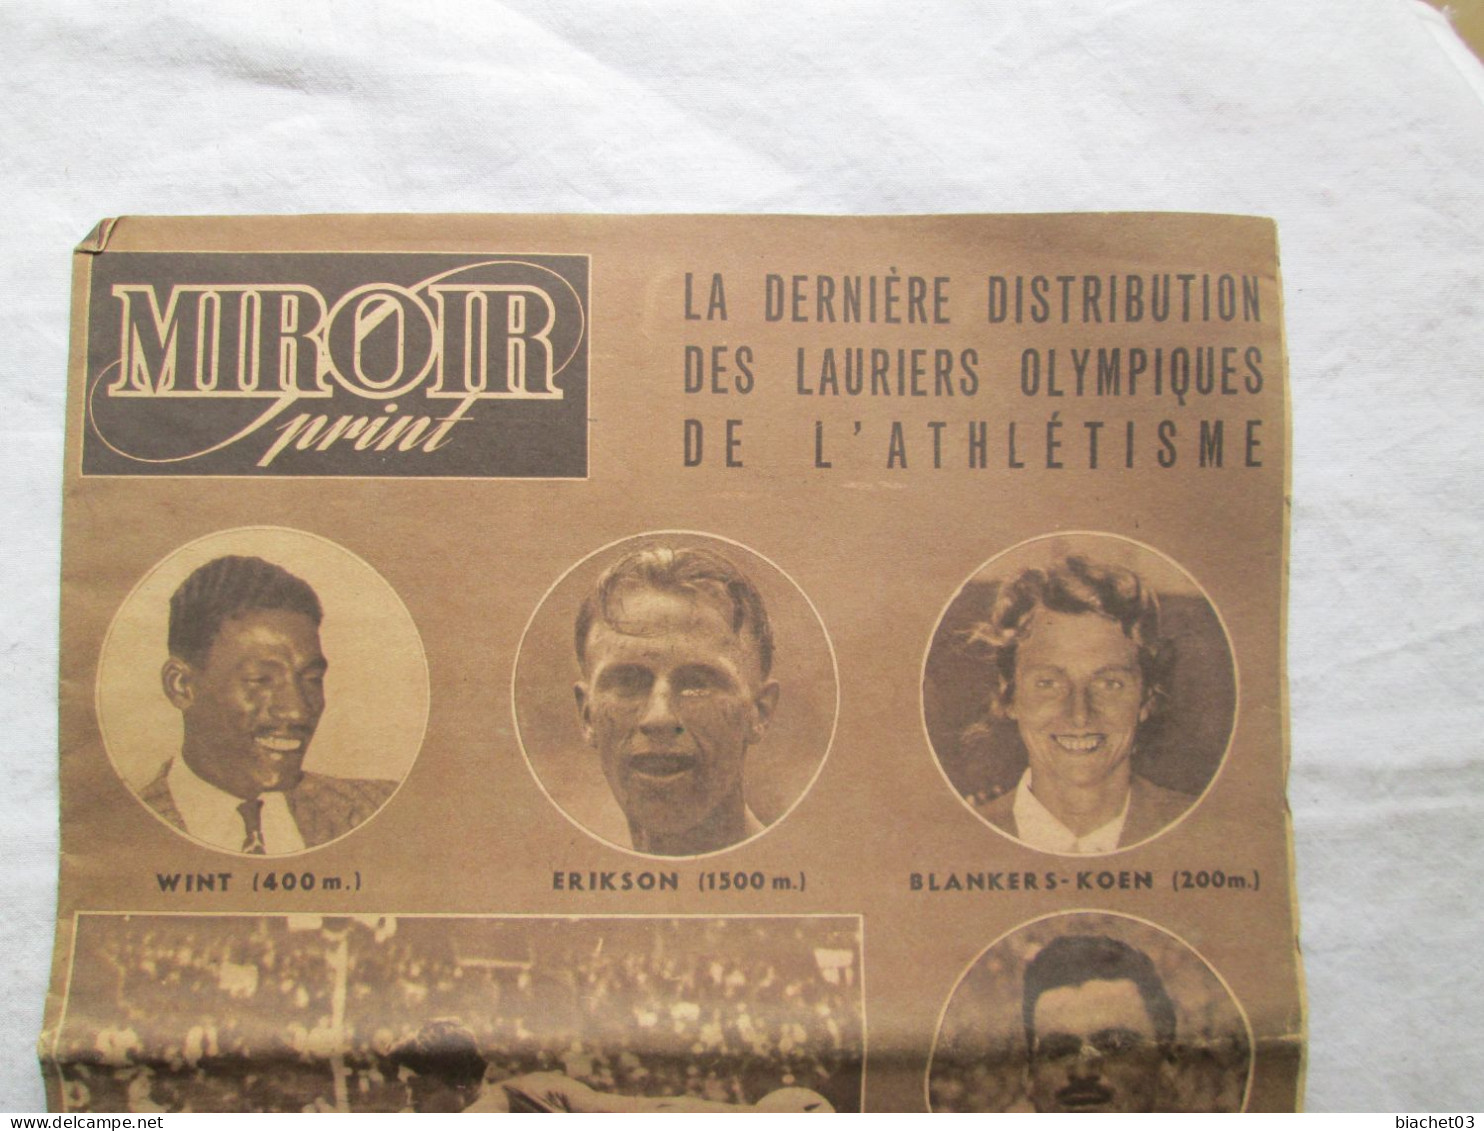 miroir sprint lot de 48 n° de 1948